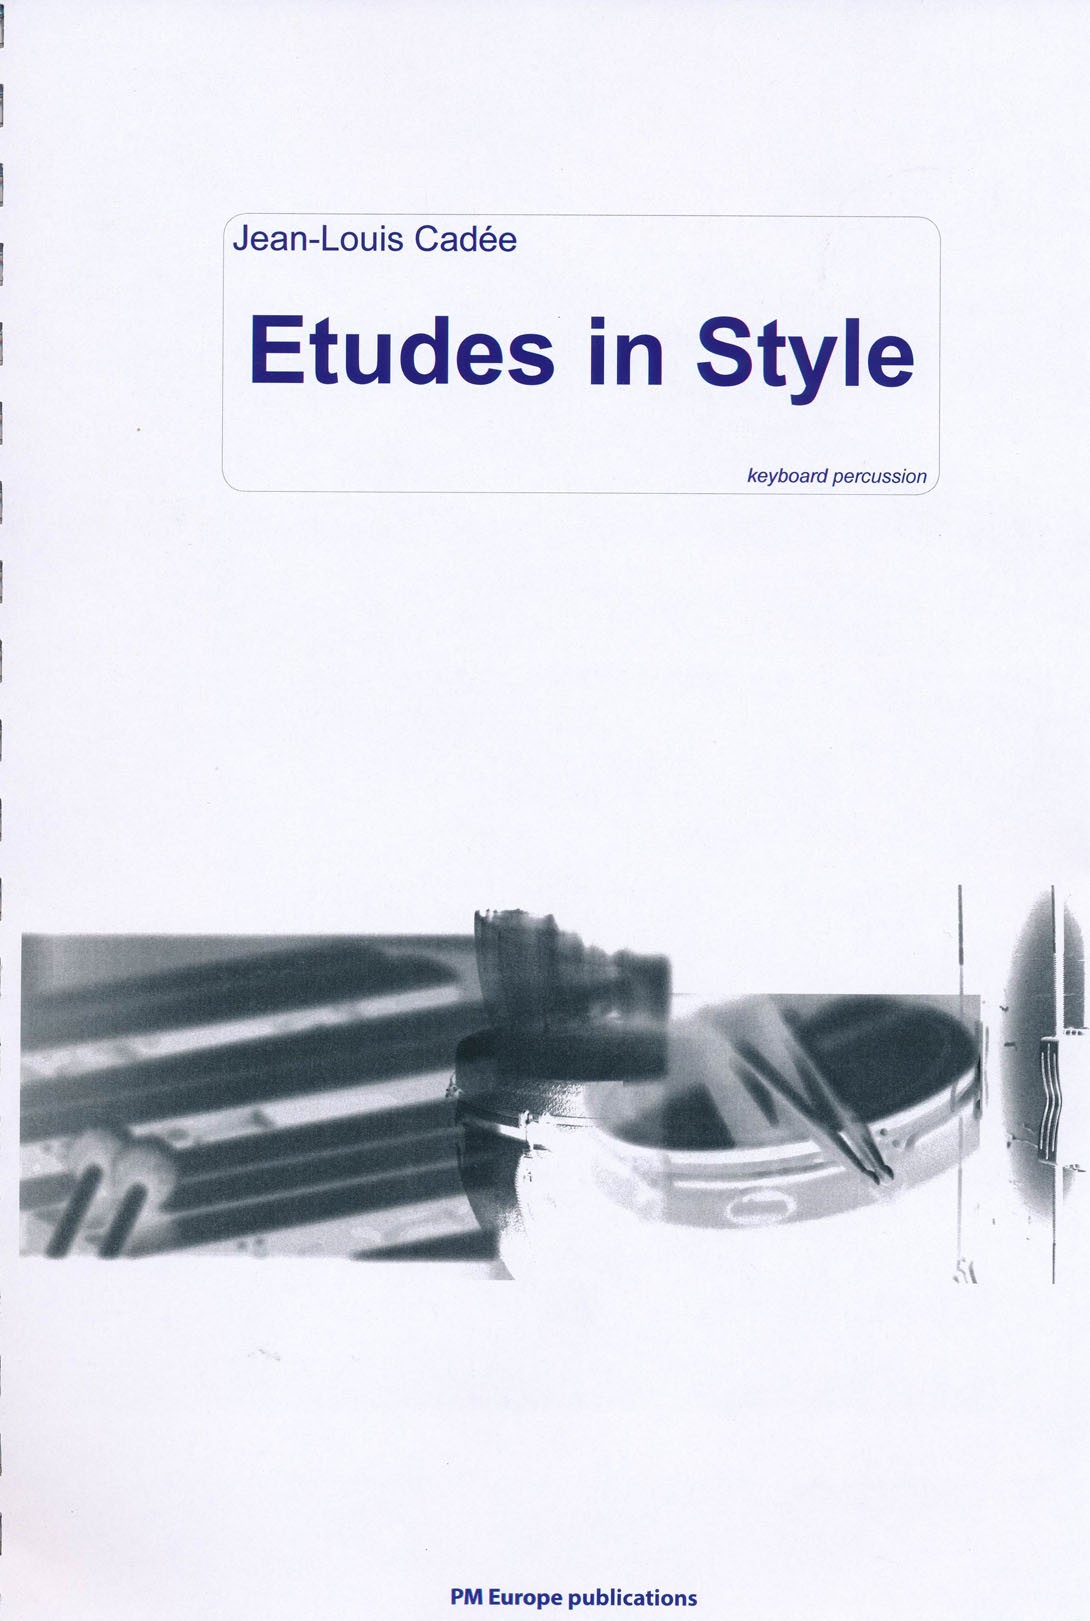 Etudes in Style by Jean-Louis Cadee